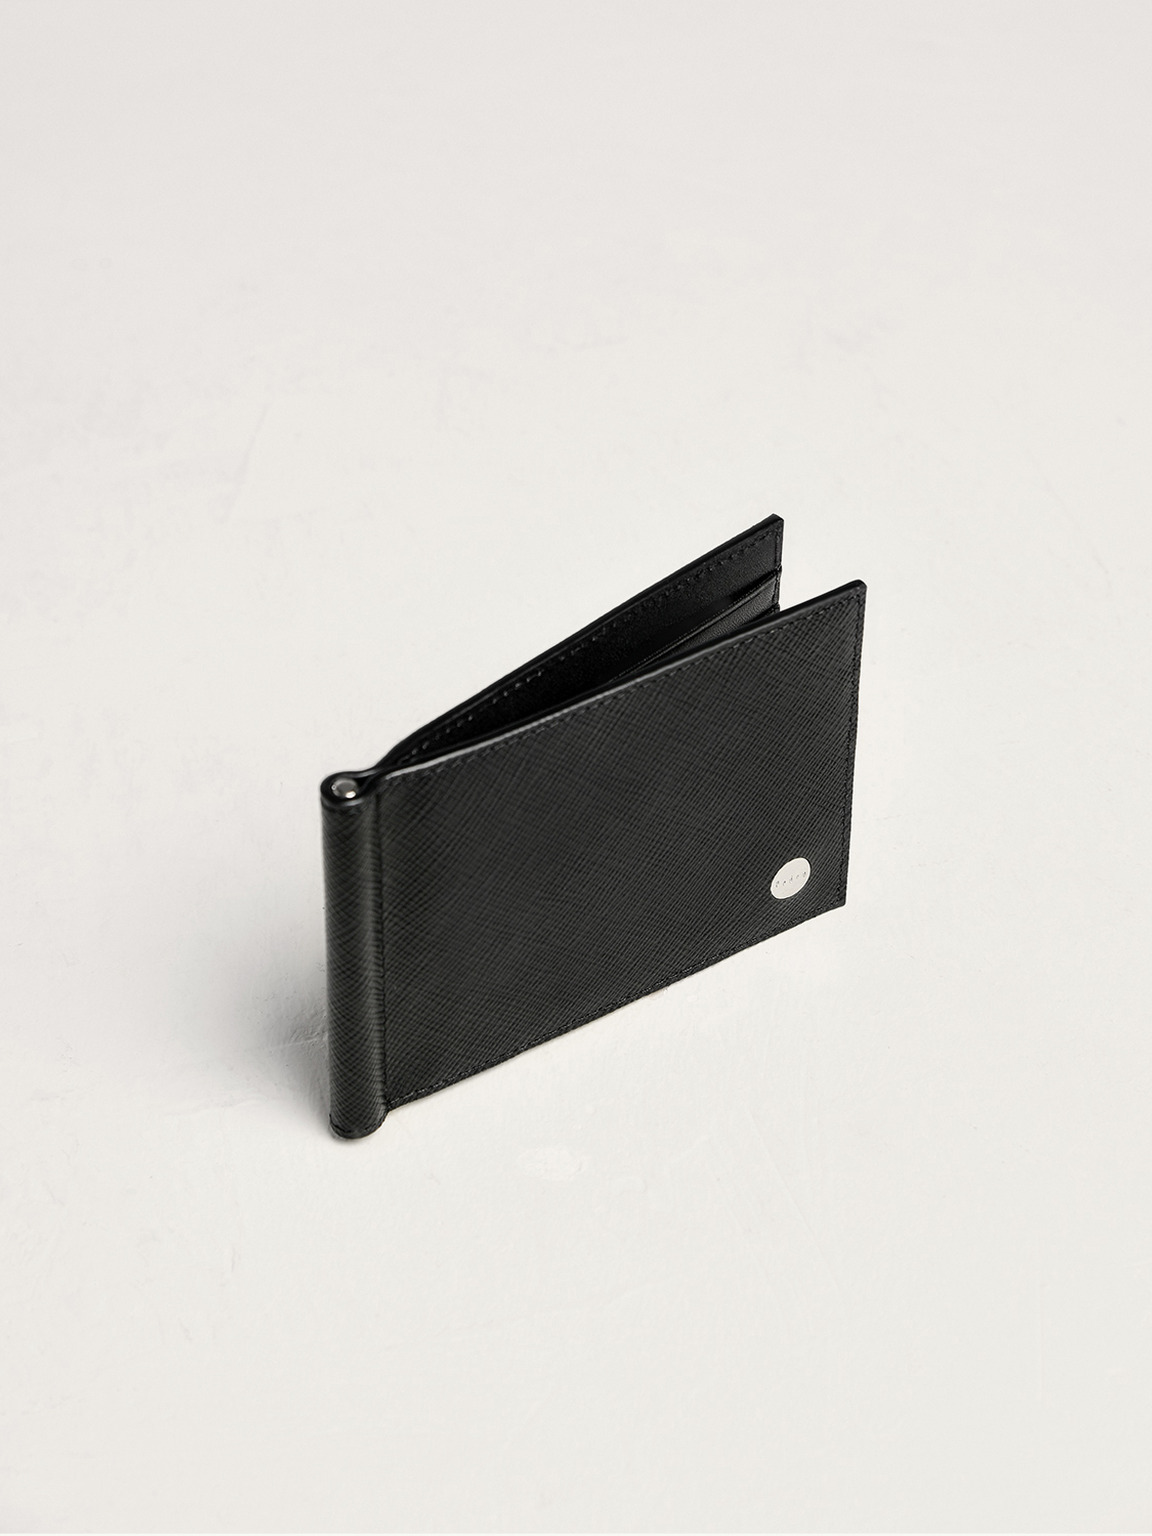 Oliver皮革雙折疊錢包帶錢夾卡包, 黑色